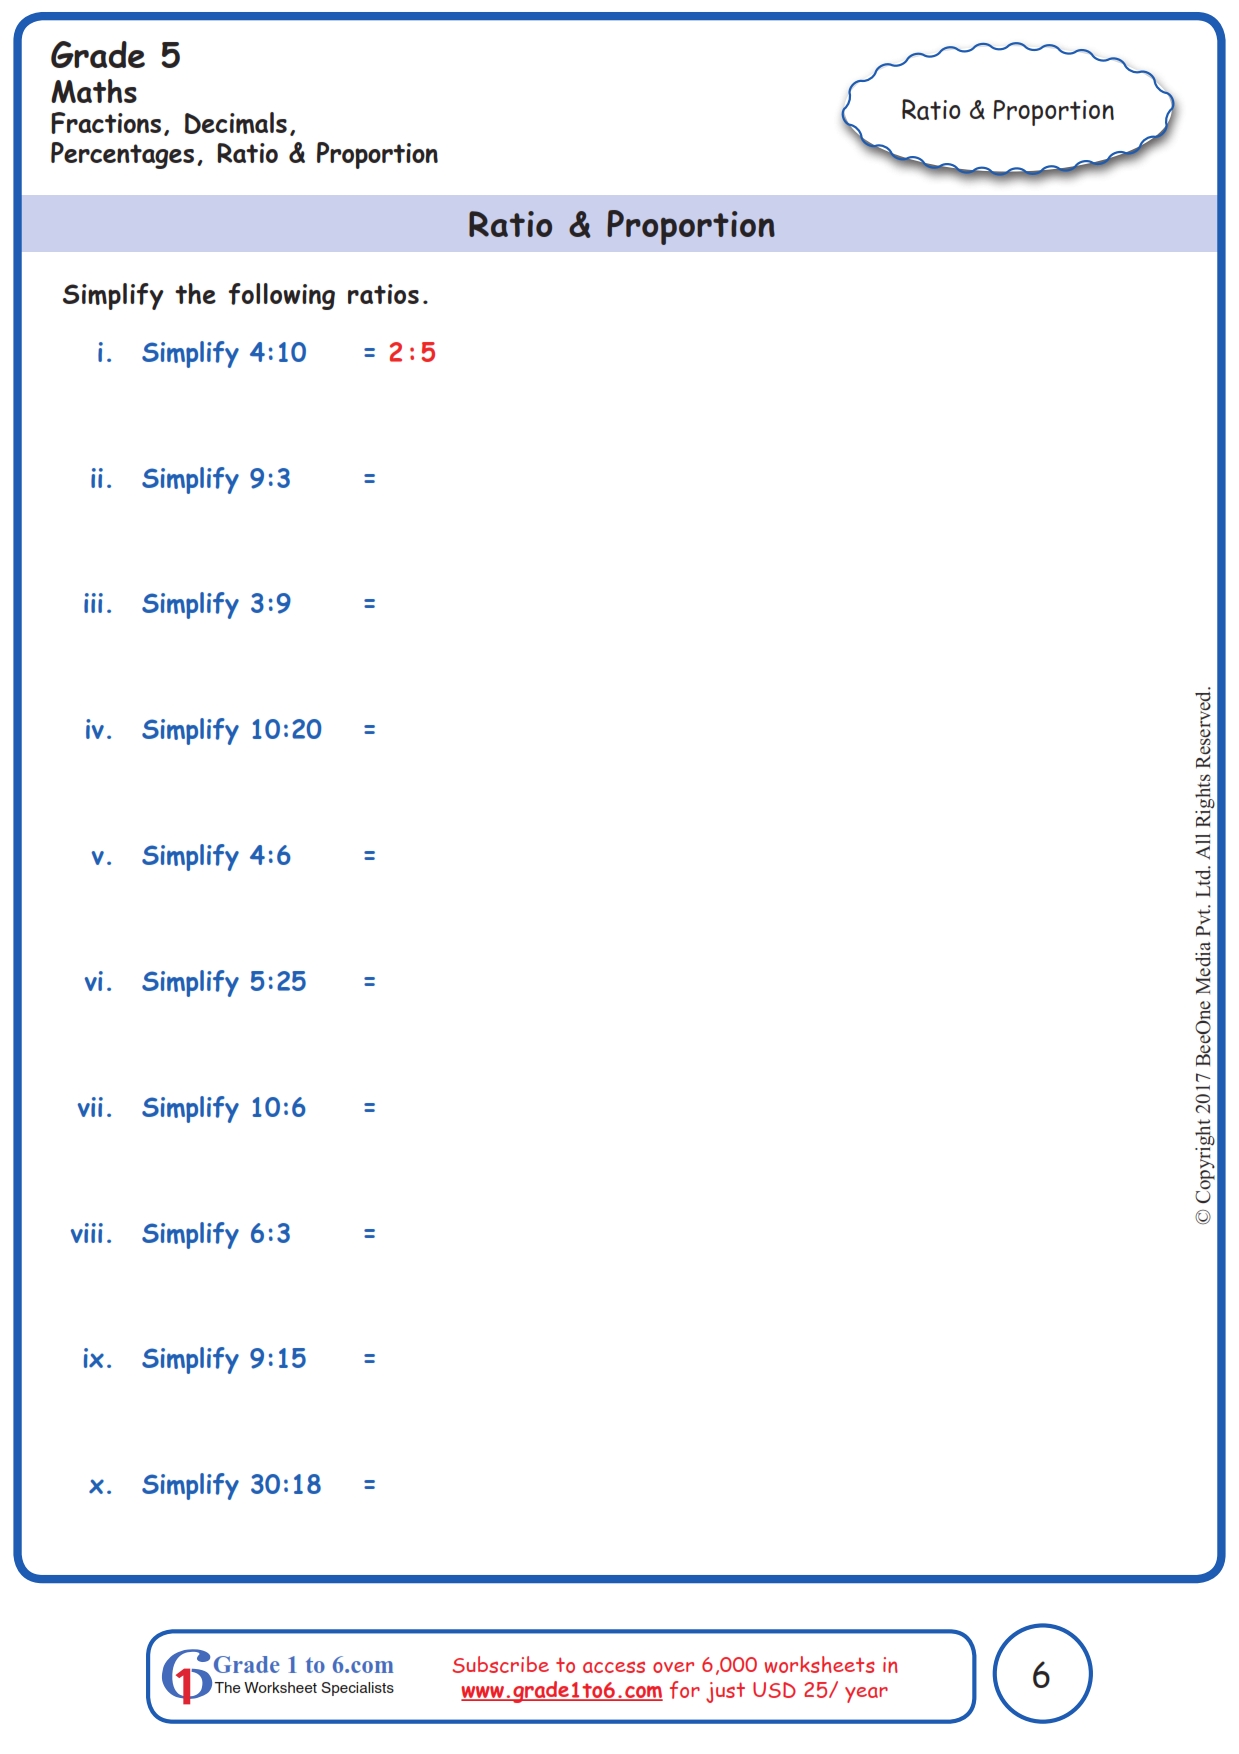 Grade 5 Simplifying Ratio Worksheets|www.grade1to6.com